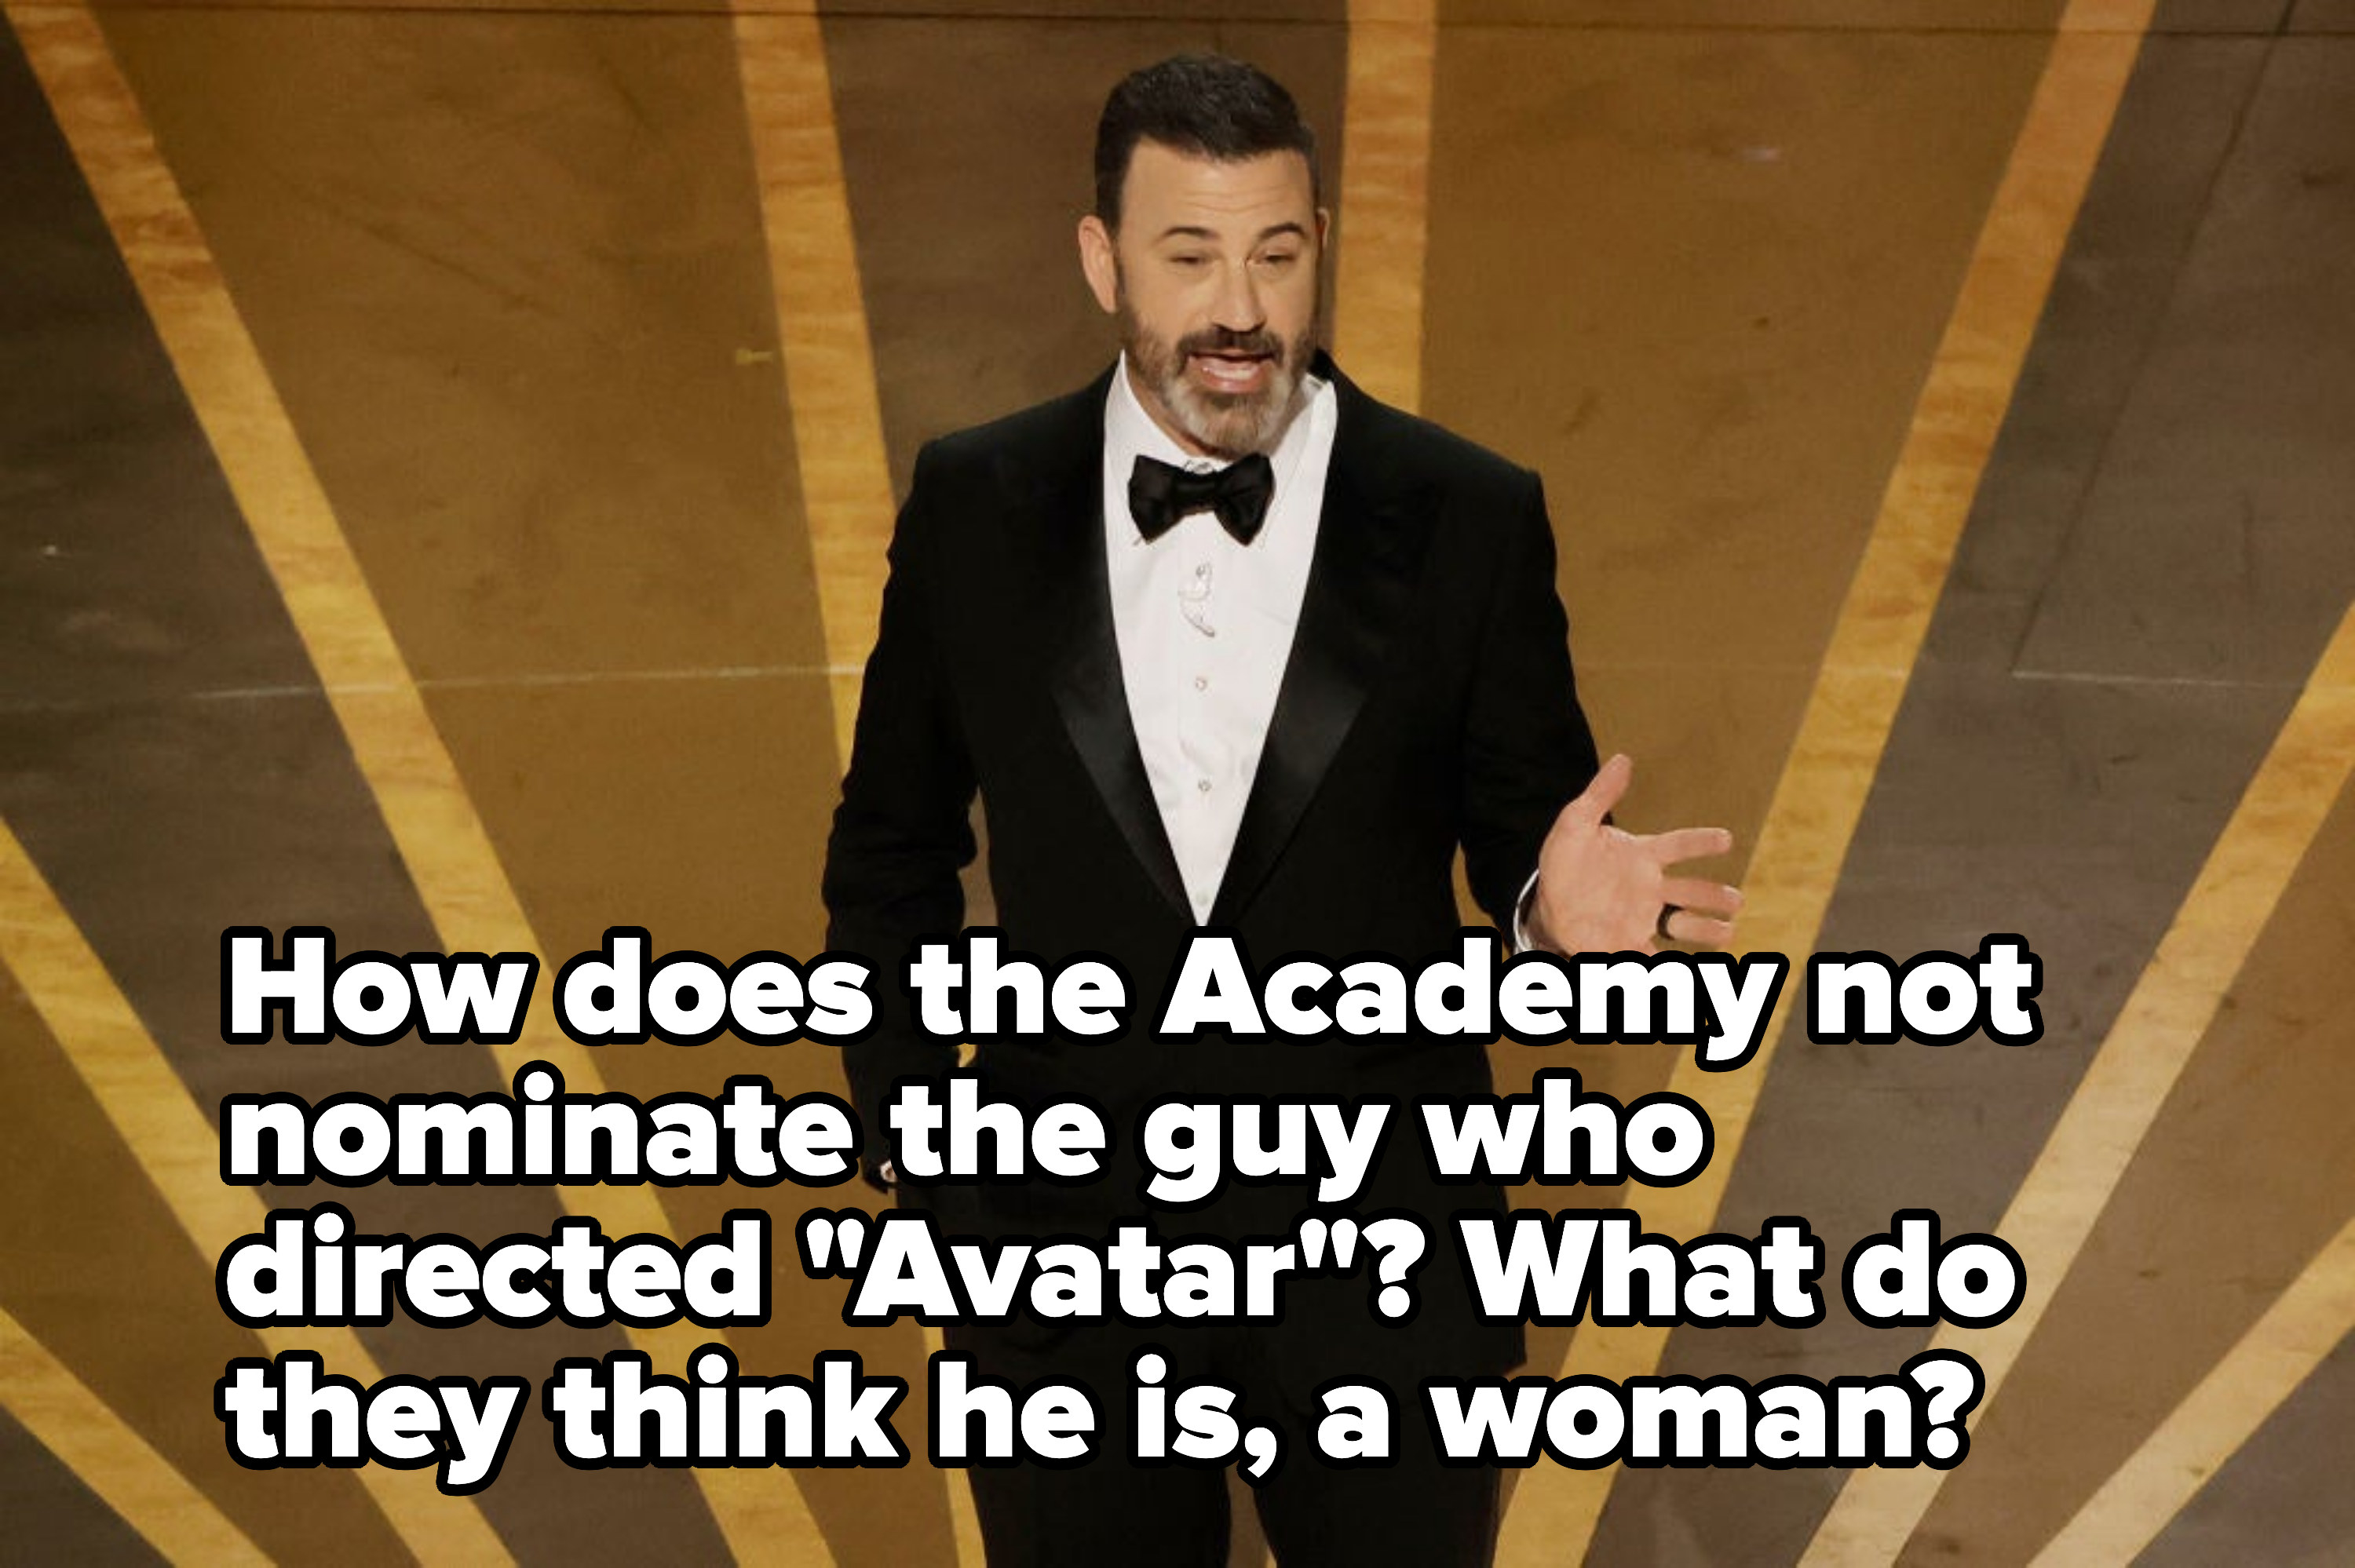 Jimmy Kimmel hosting the Oscars